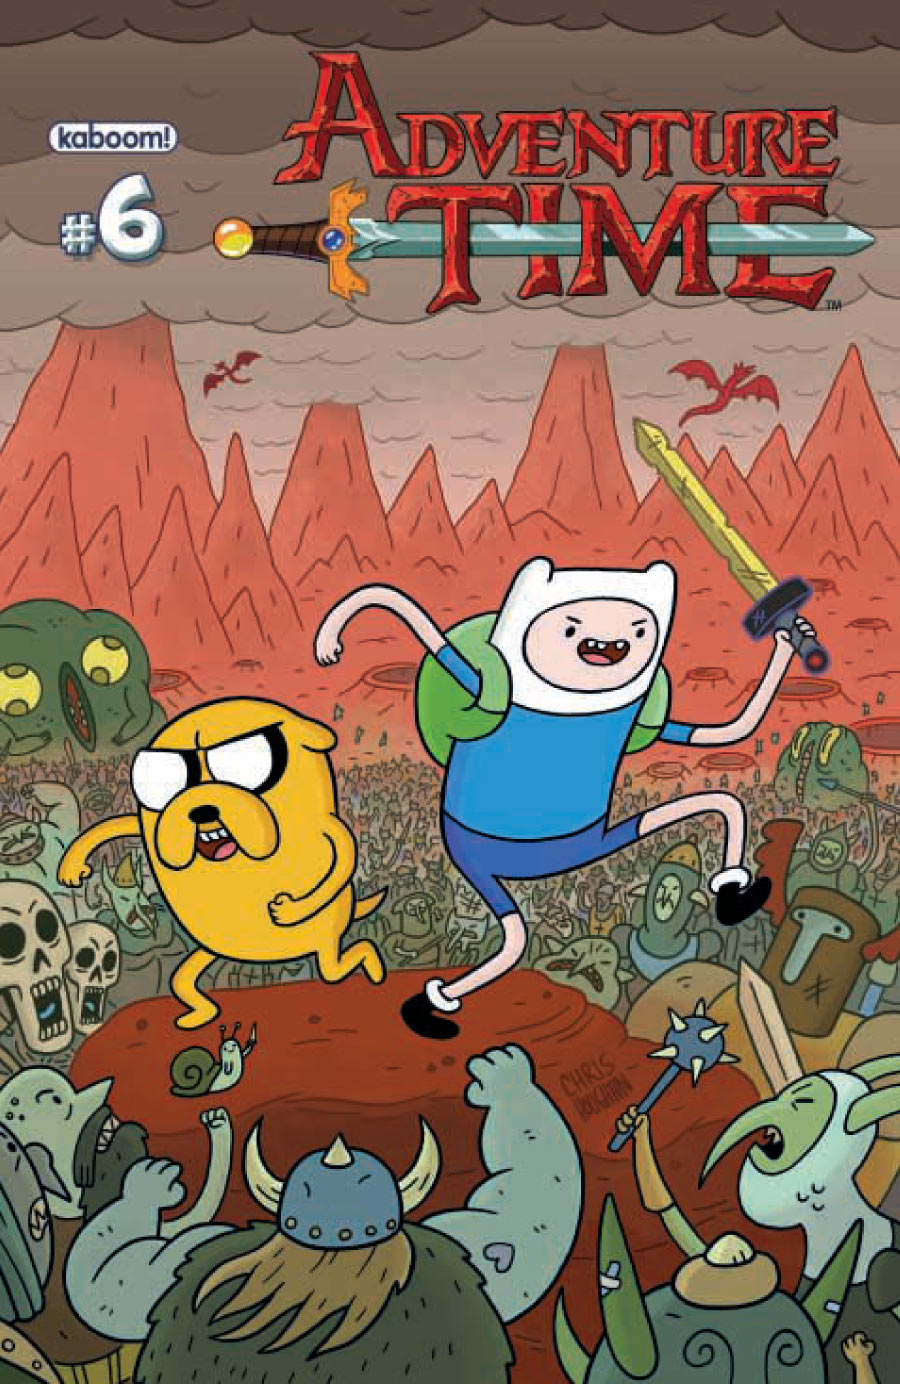 Adventure Time (season 6) - Wikipedia